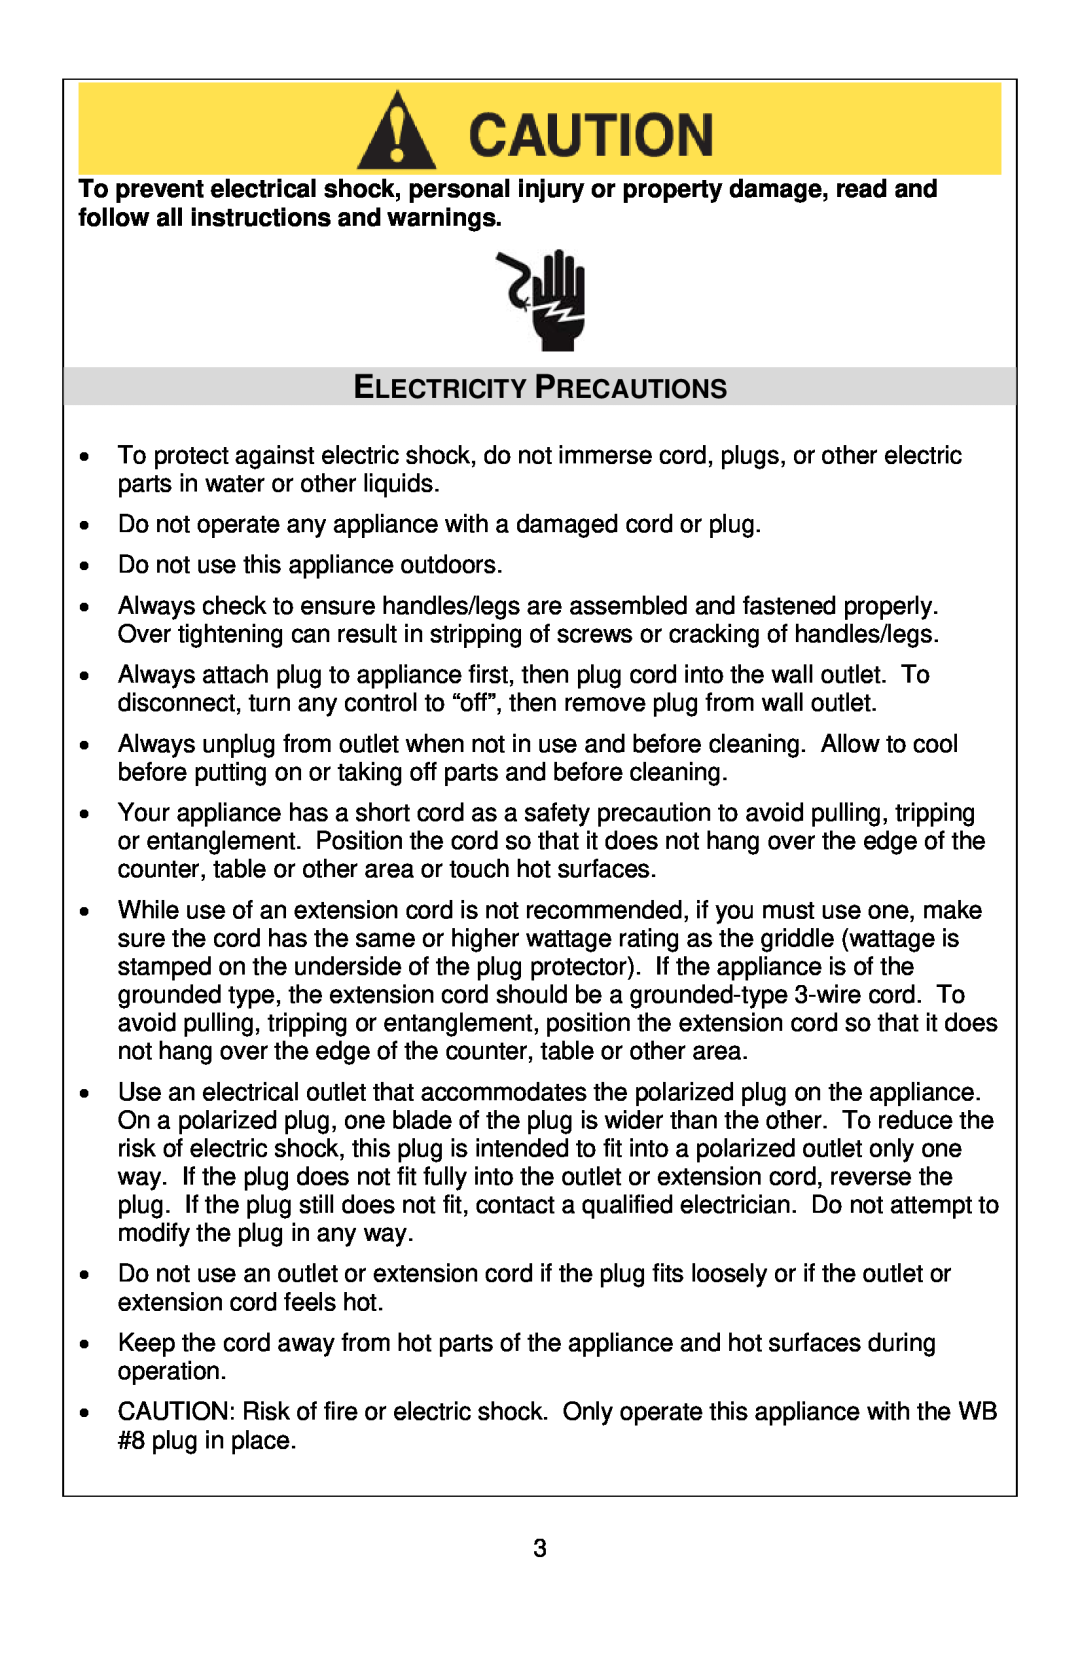 West Bend 79012, L5687 instruction manual Electricity Precautions 